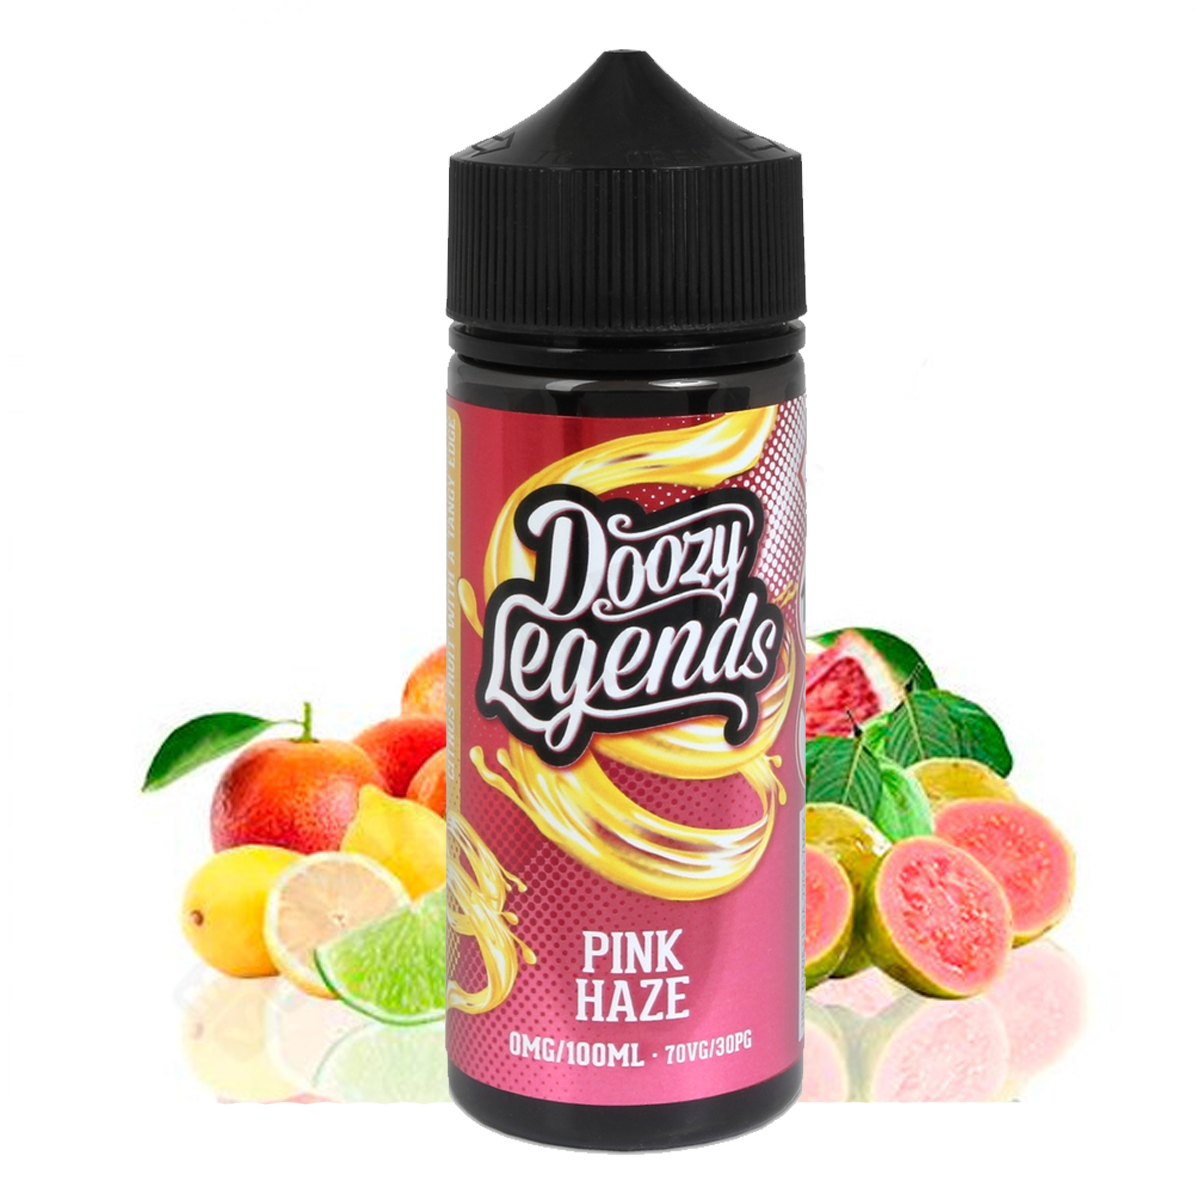 Doozy Legends - Pink Haze 100 ml Shortfill